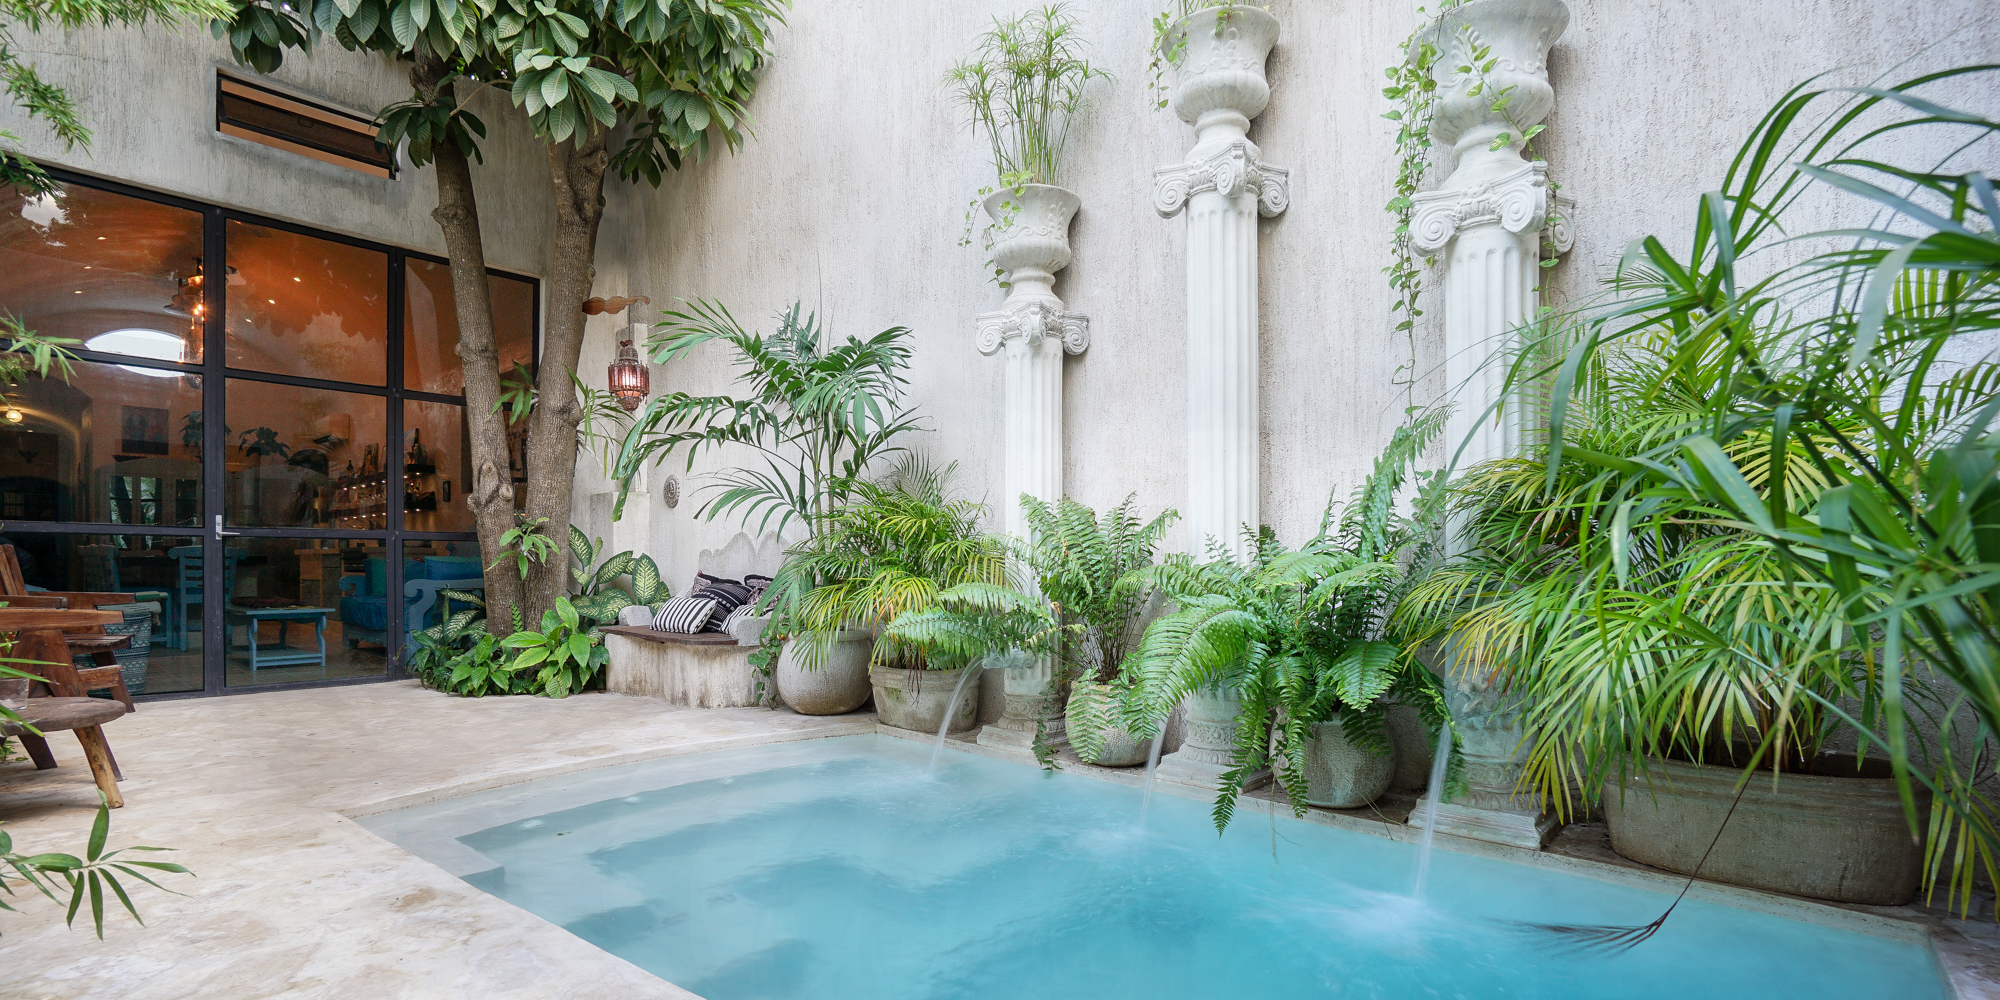 Casa Wabi Sabi – Perfectly Imperfect in La Ermita